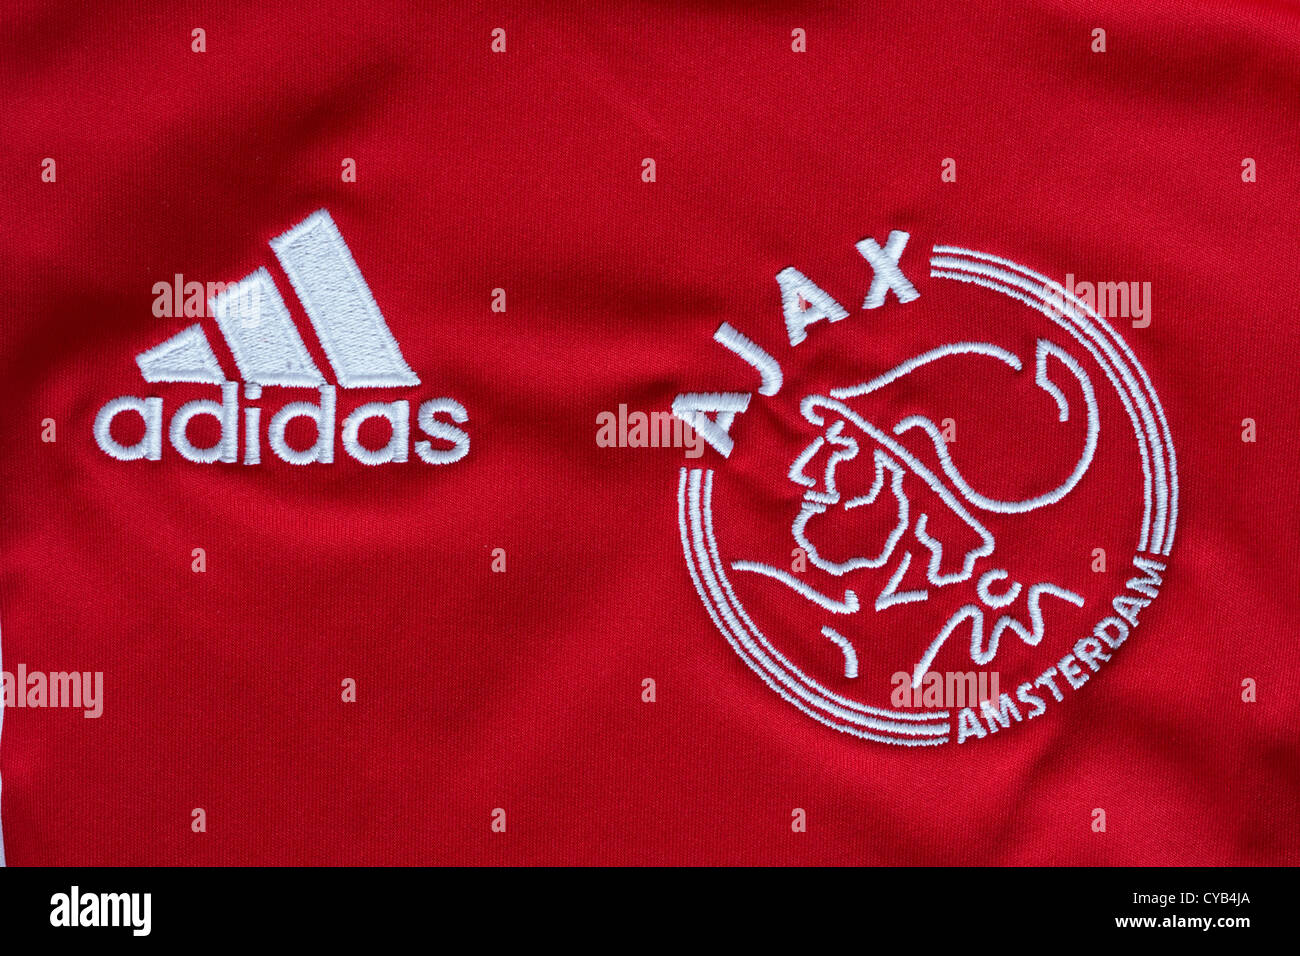 adidas logo and Ajax Amsterdam logos on red football shirt Stock Photo -  Alamy